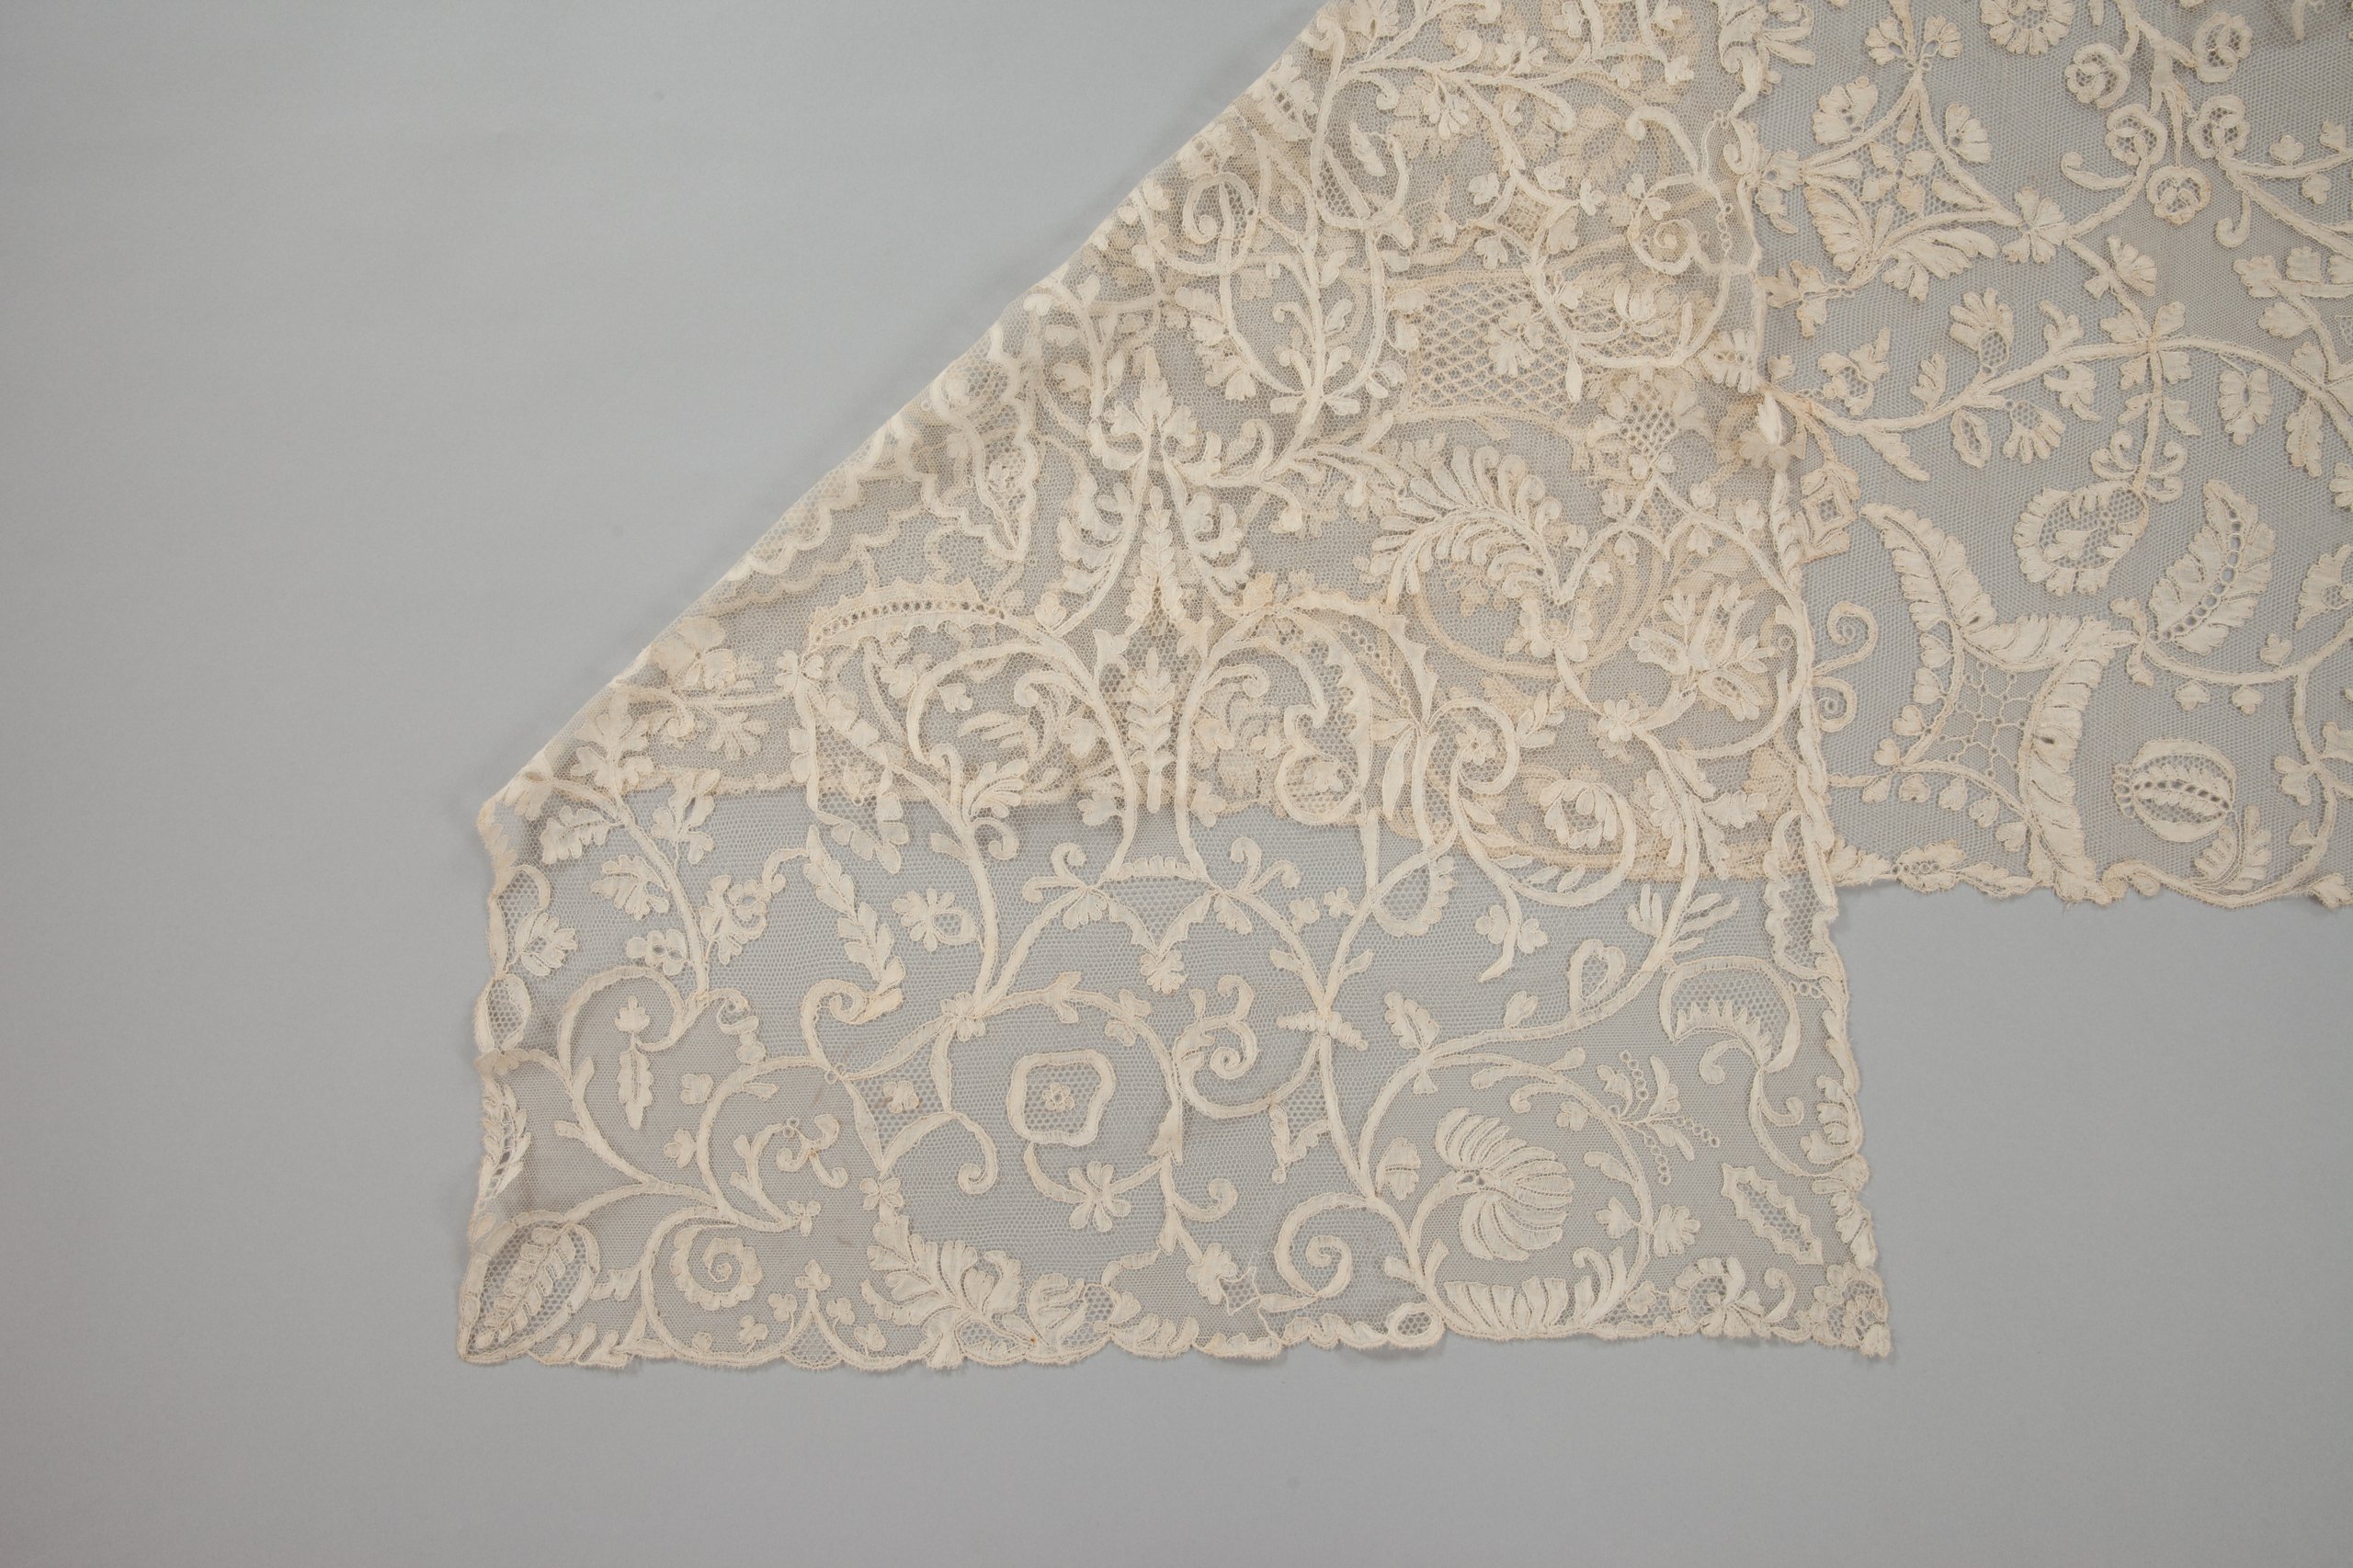 18th century shawl from England